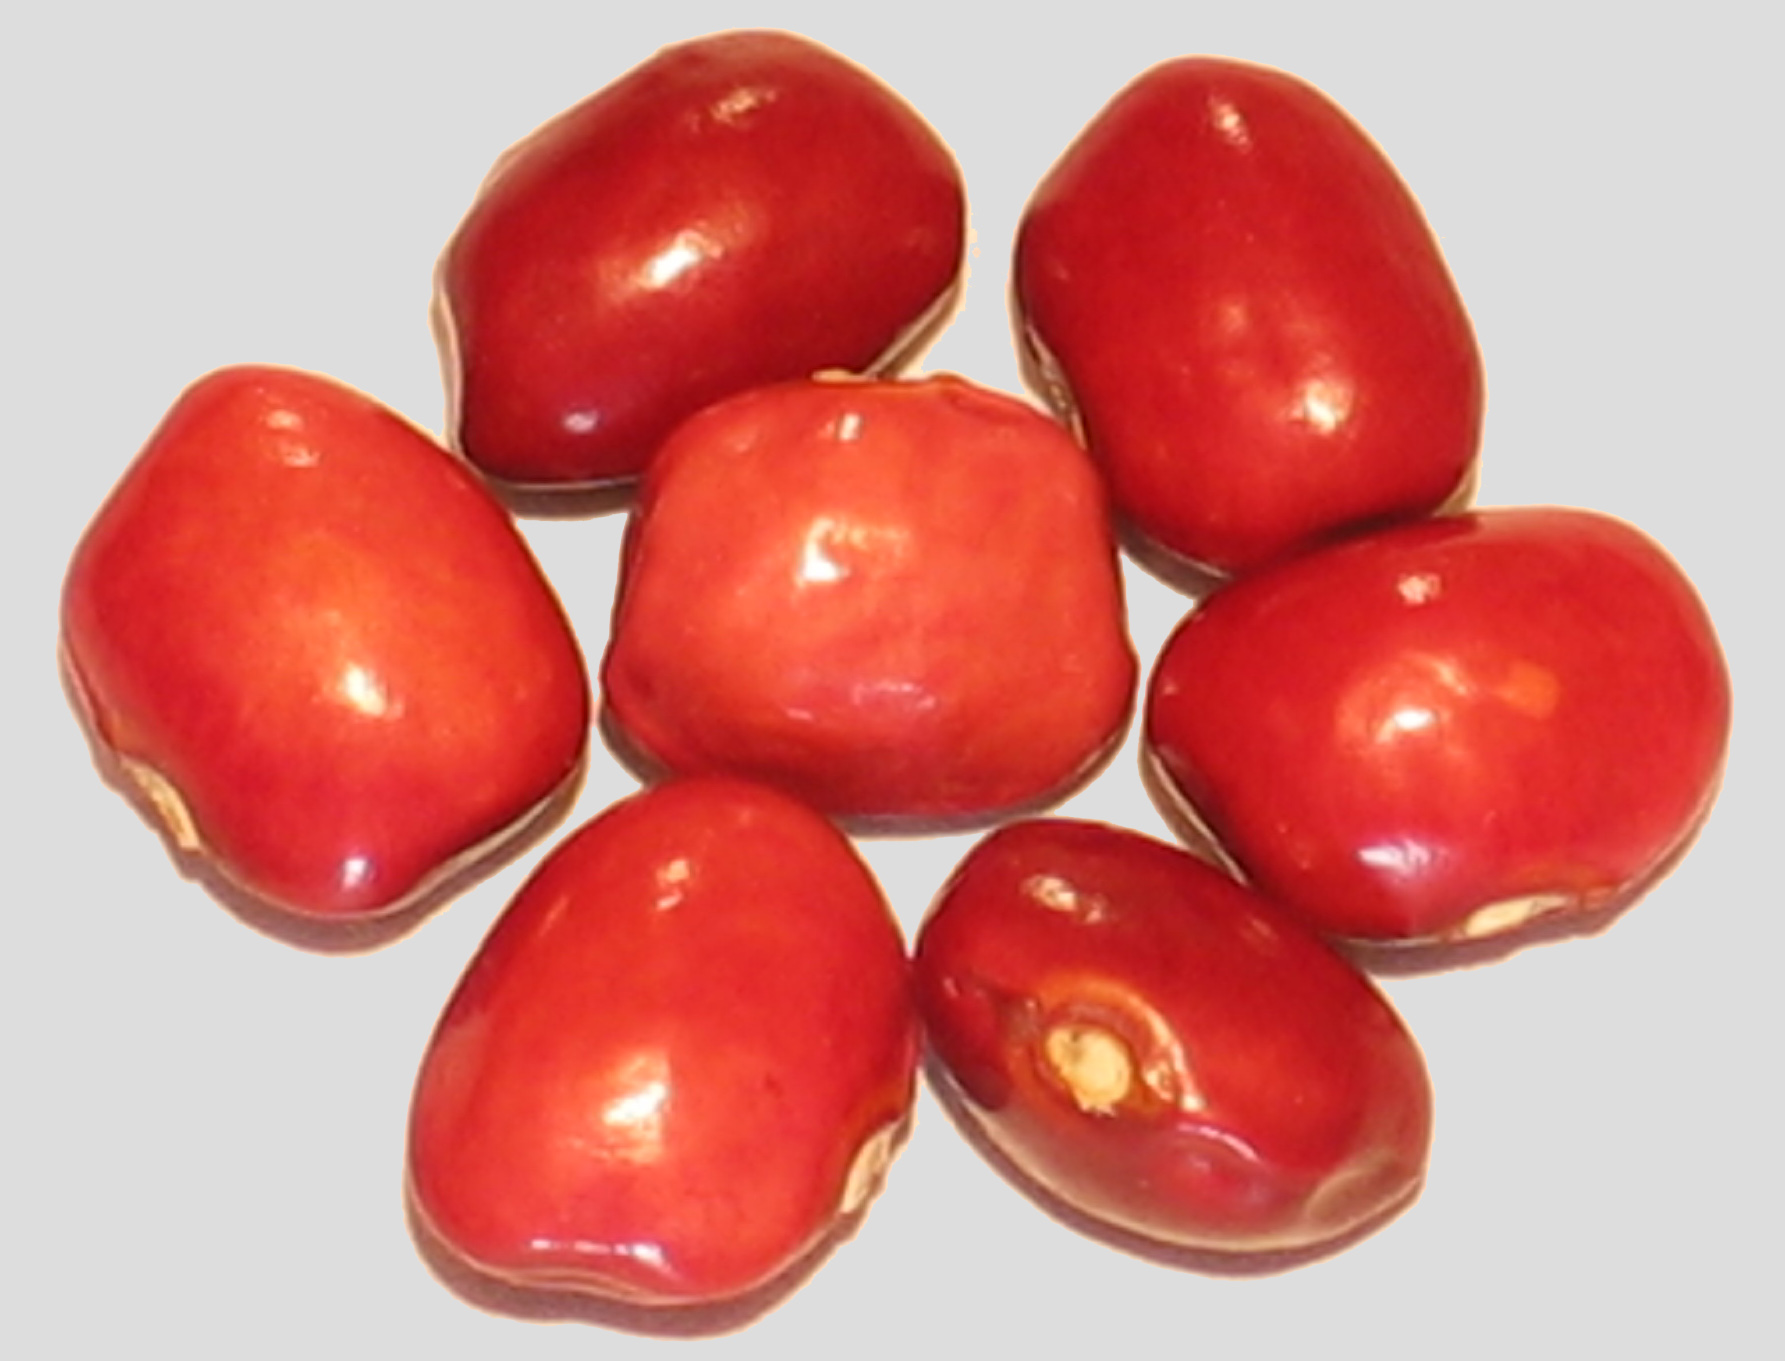 image of Rote Kipflerbohne beans